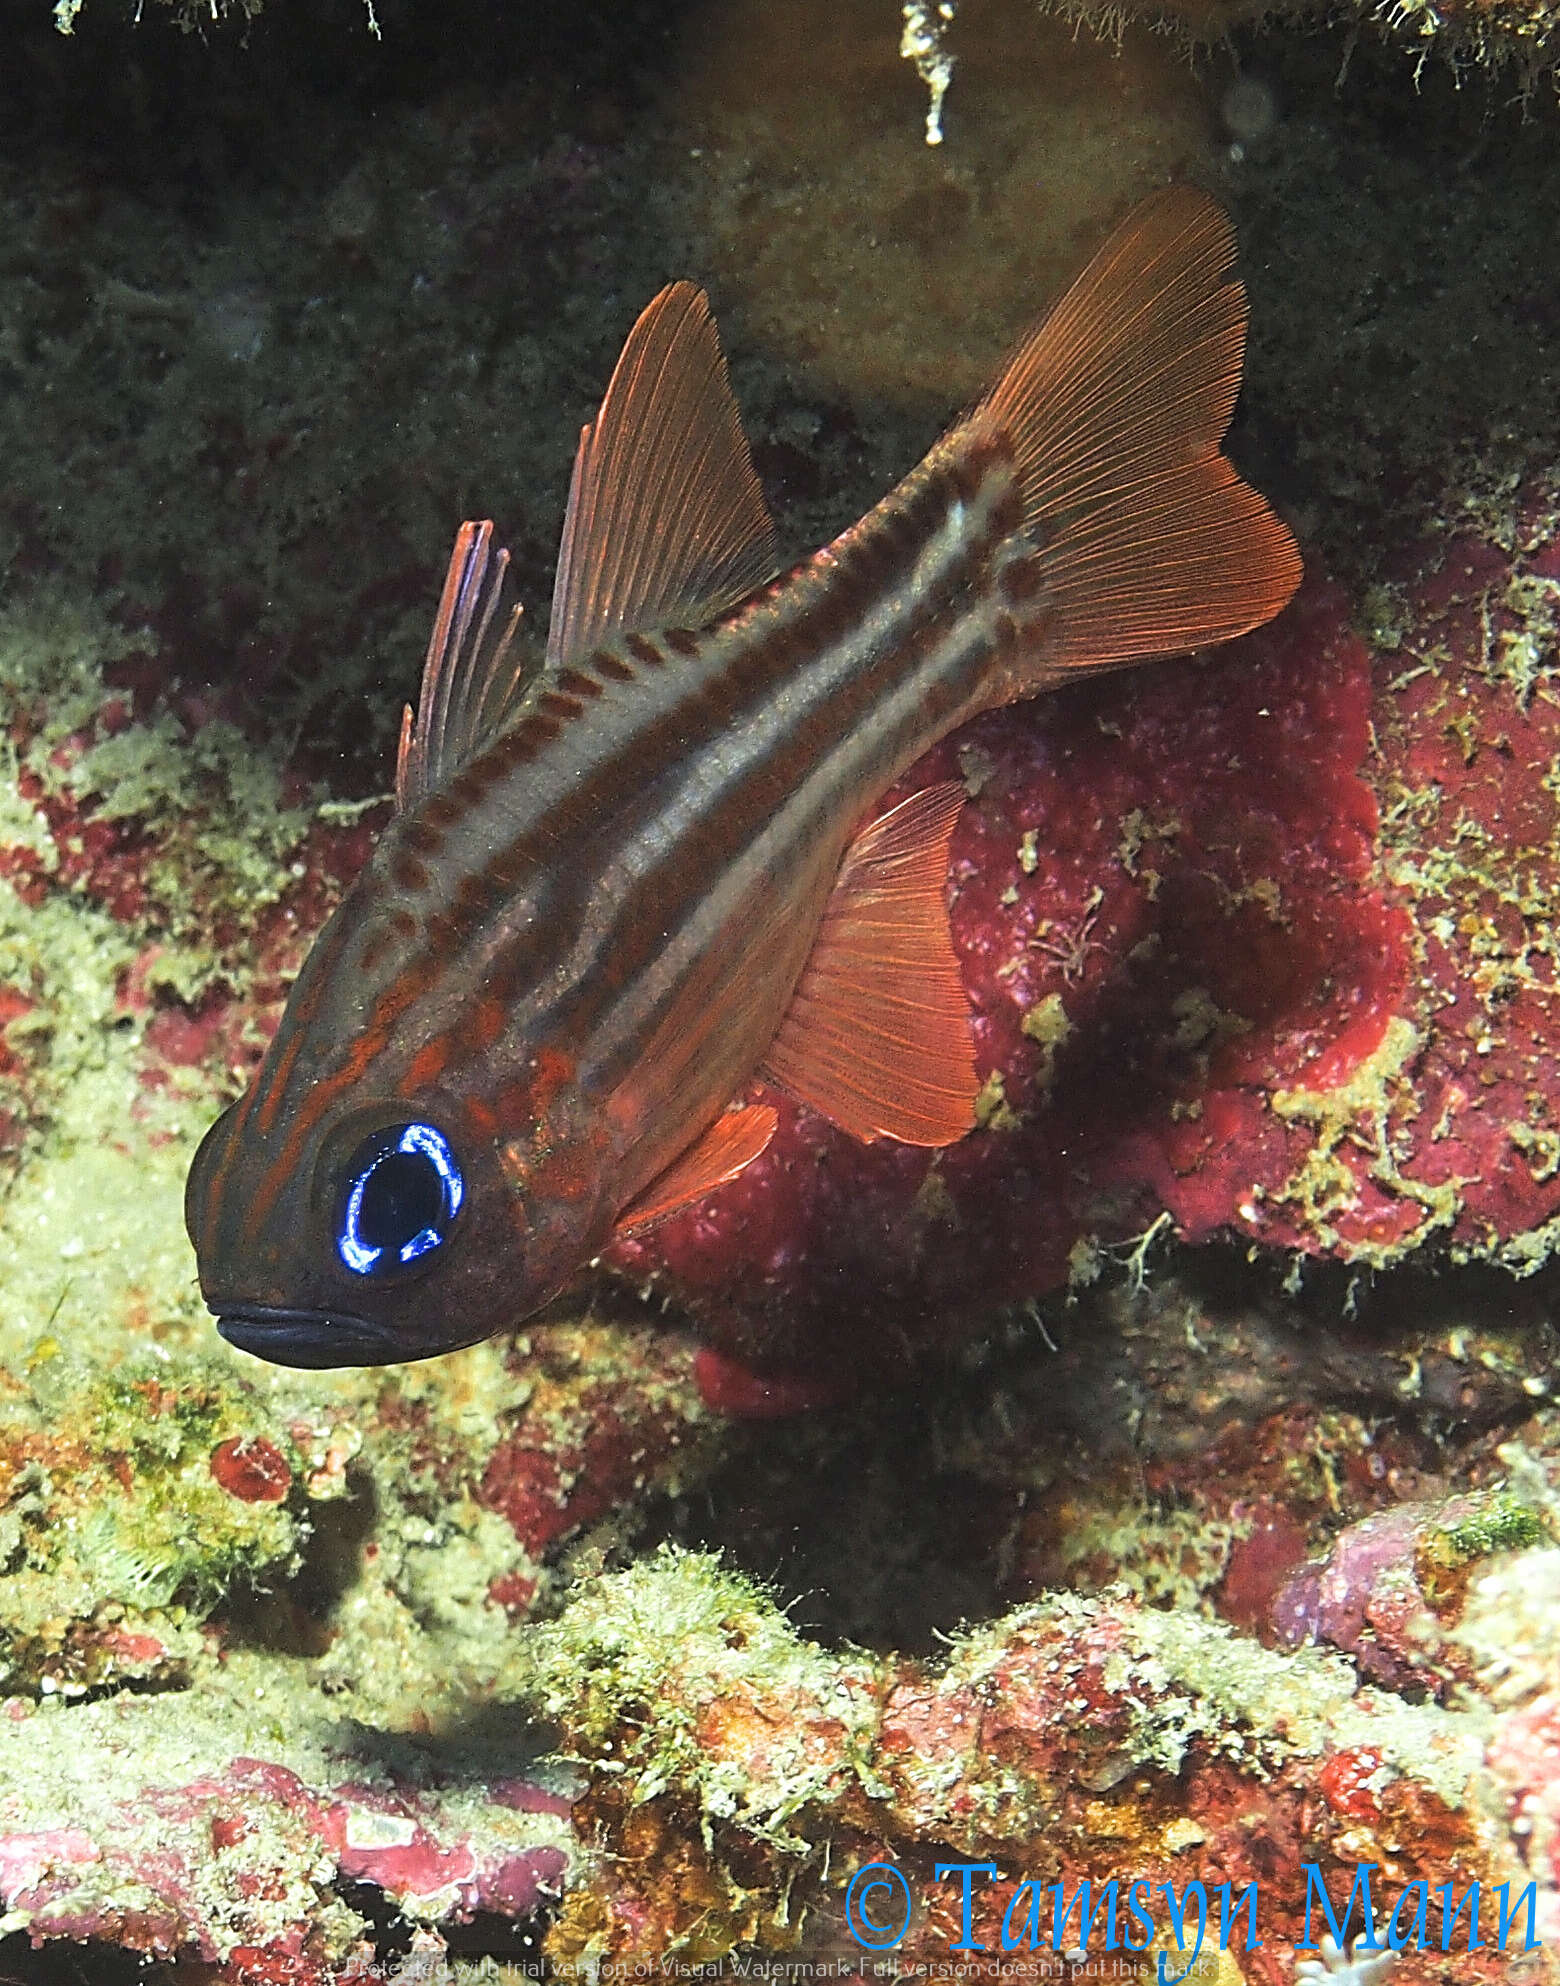 Image of Blue-eye cardinalfish